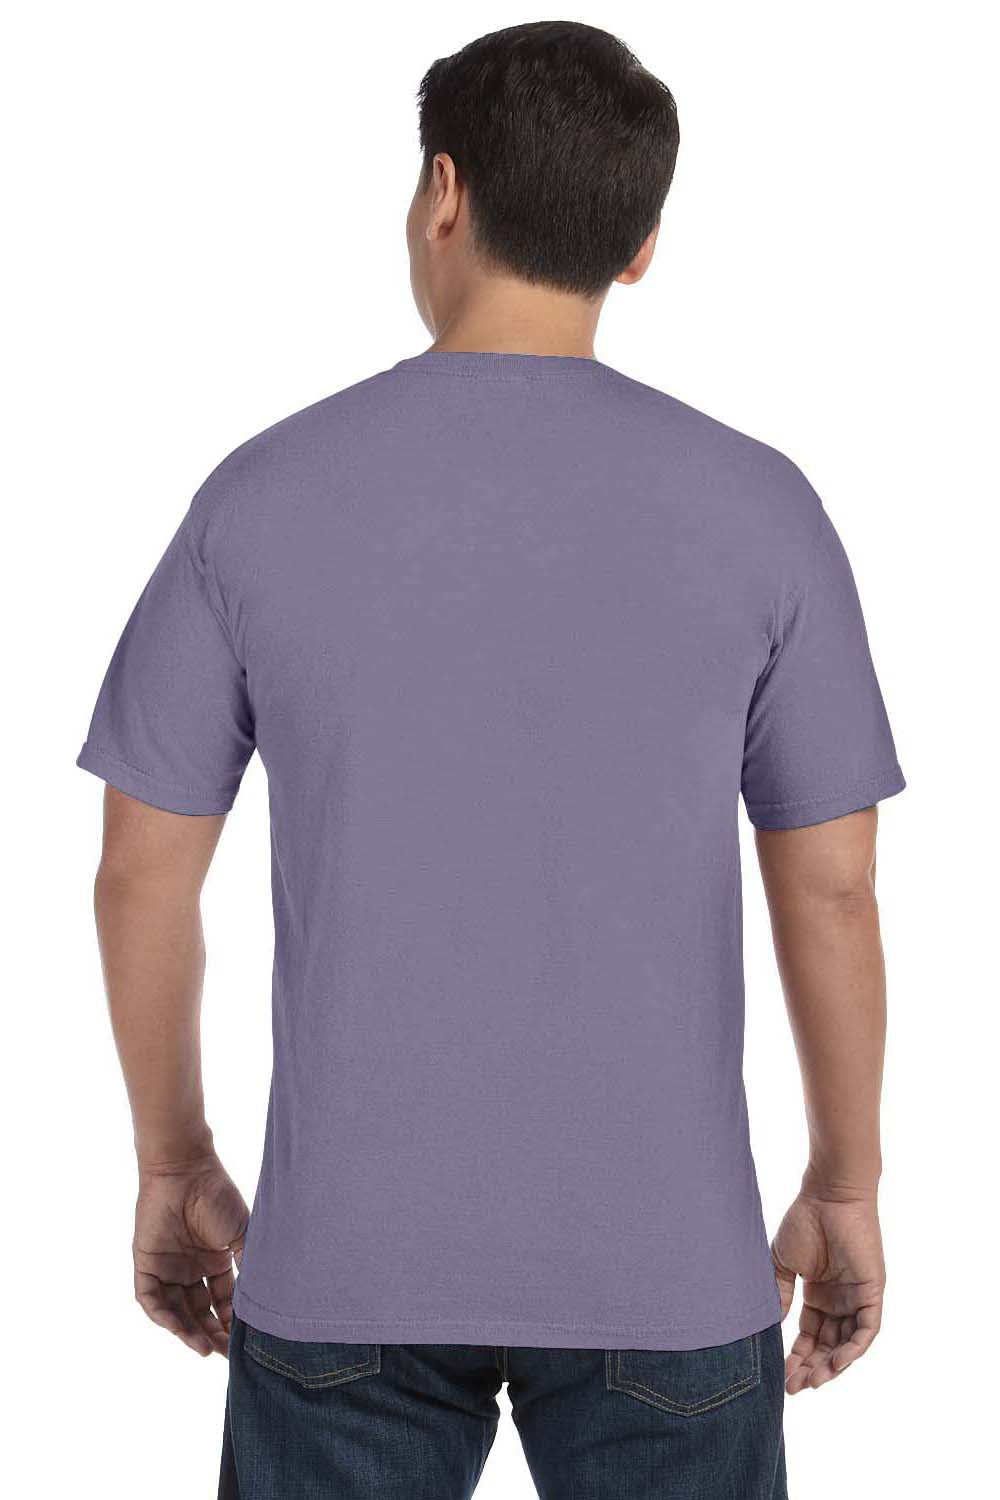 Comfort Colors C1717 Mens Short Sleeve Crewneck T-Shirt Wine Purple Back